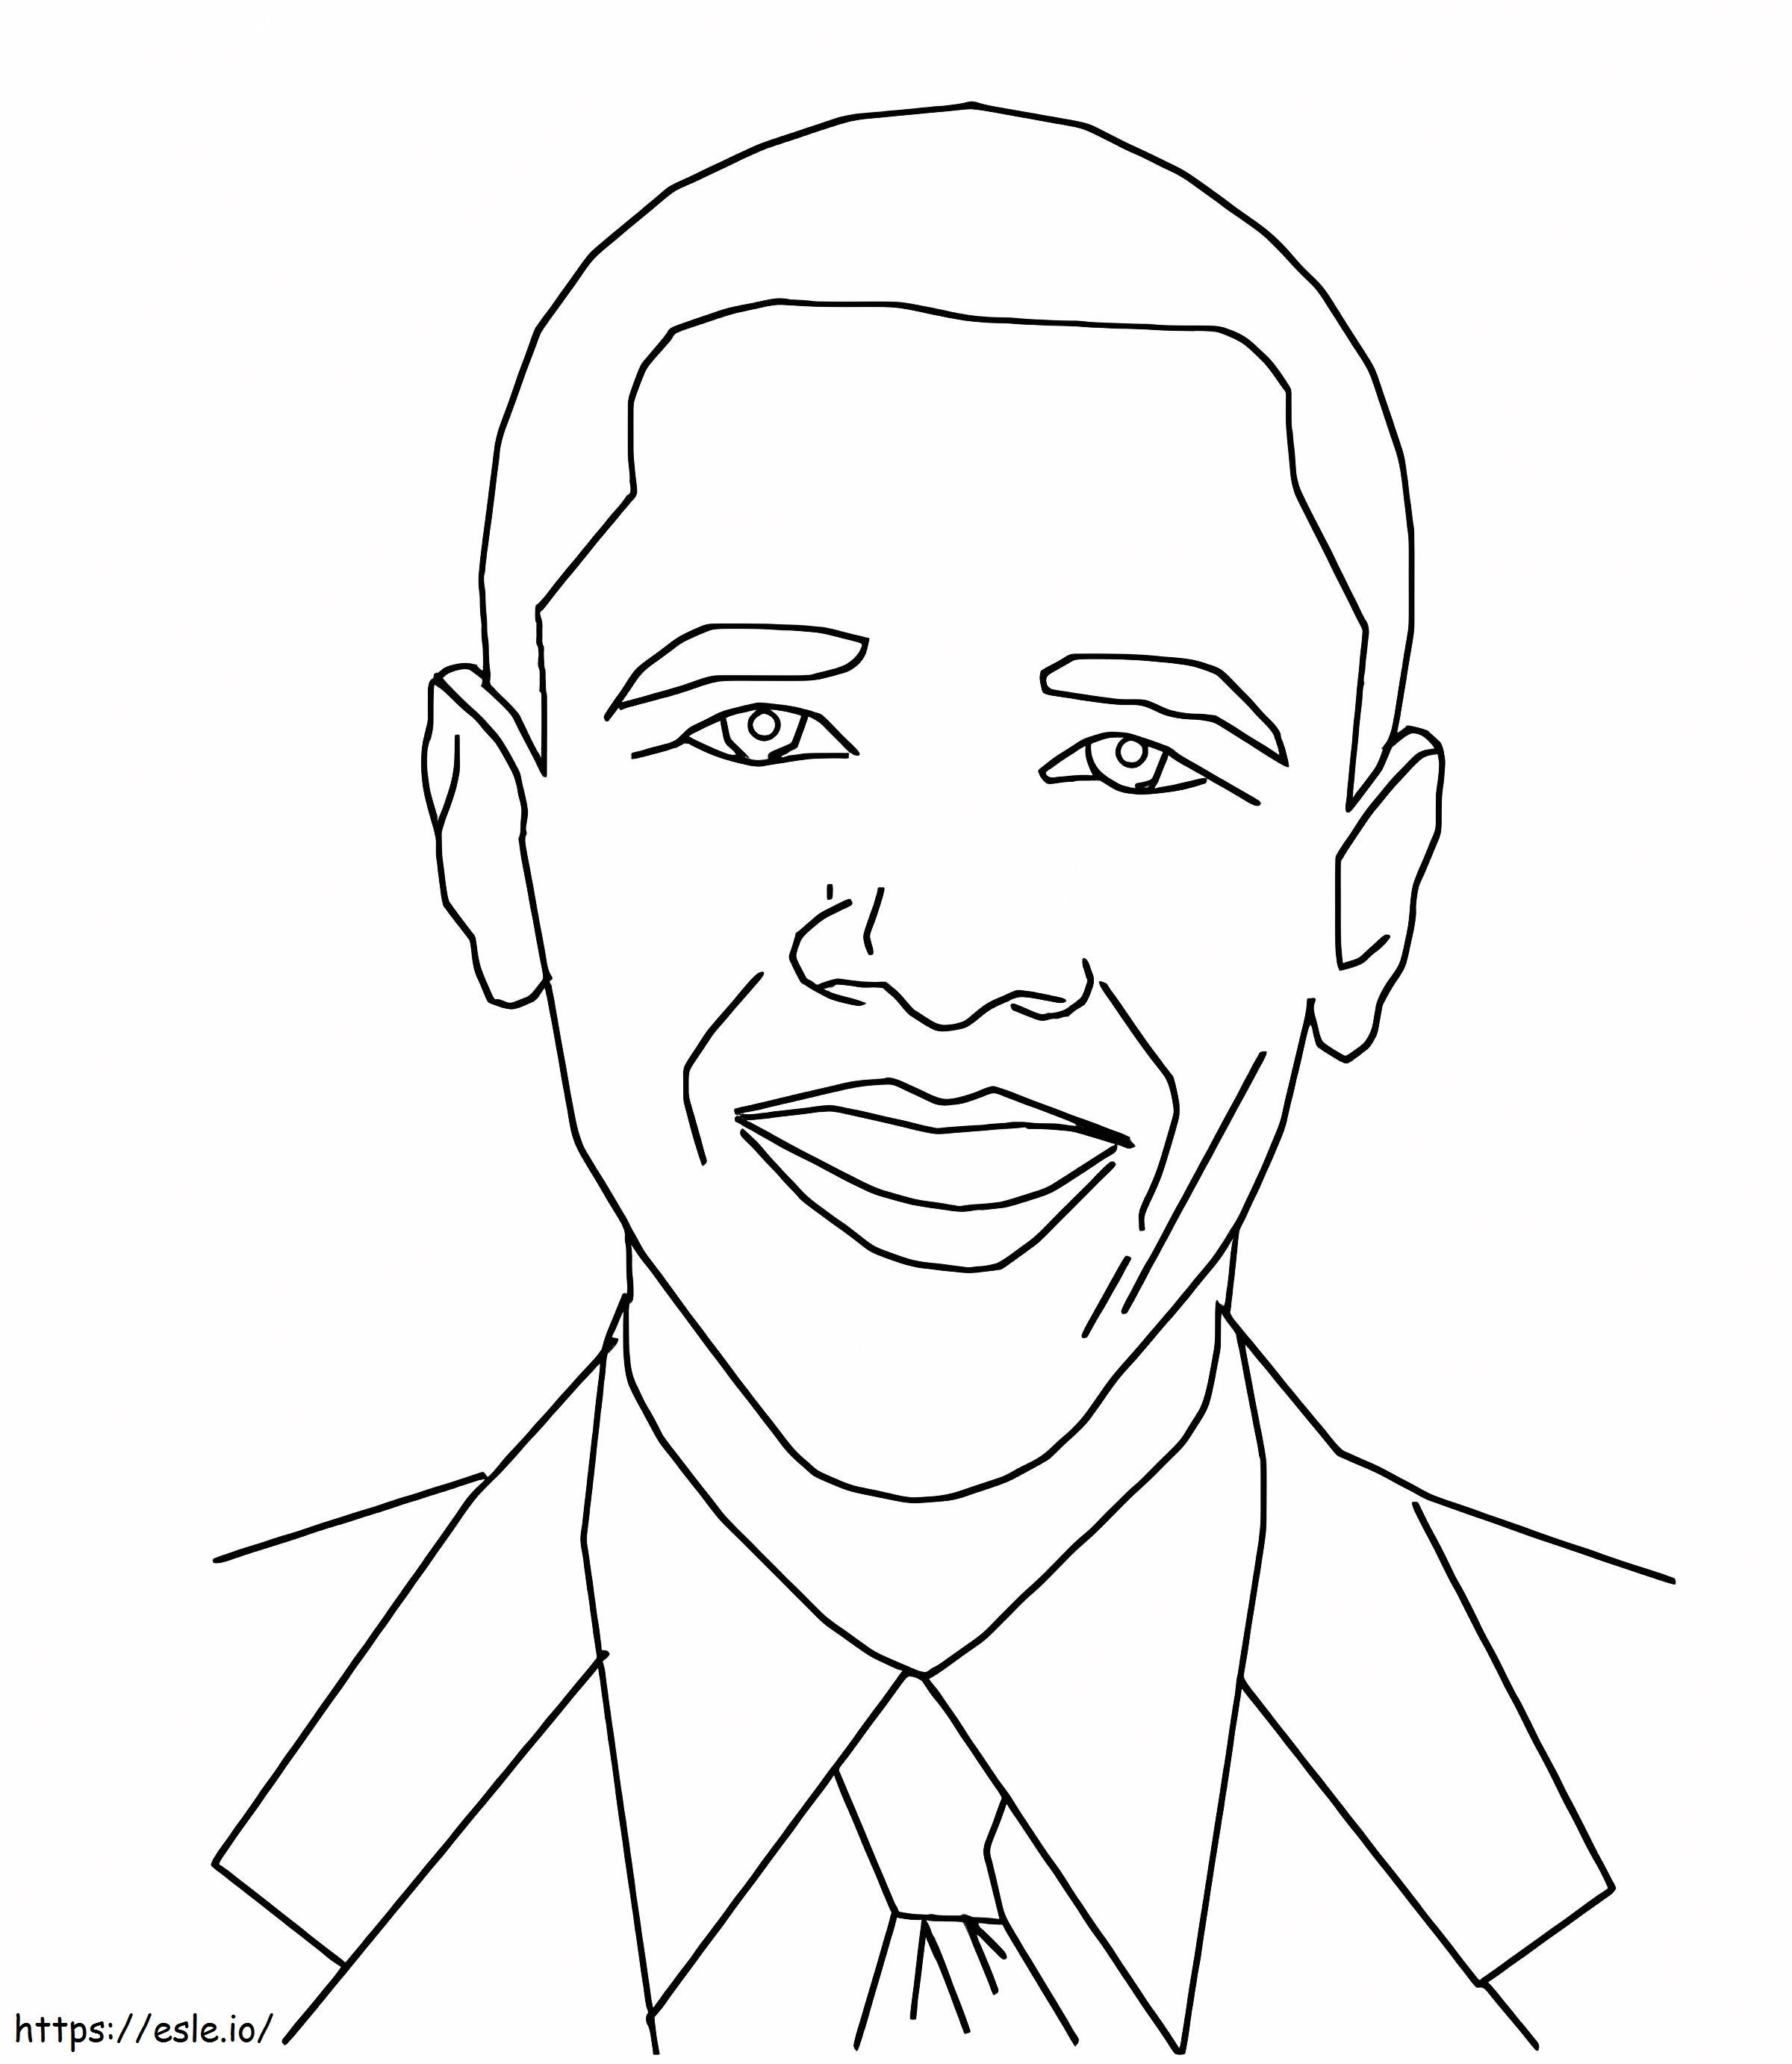 Simpel Obama kleurplaat kleurplaat